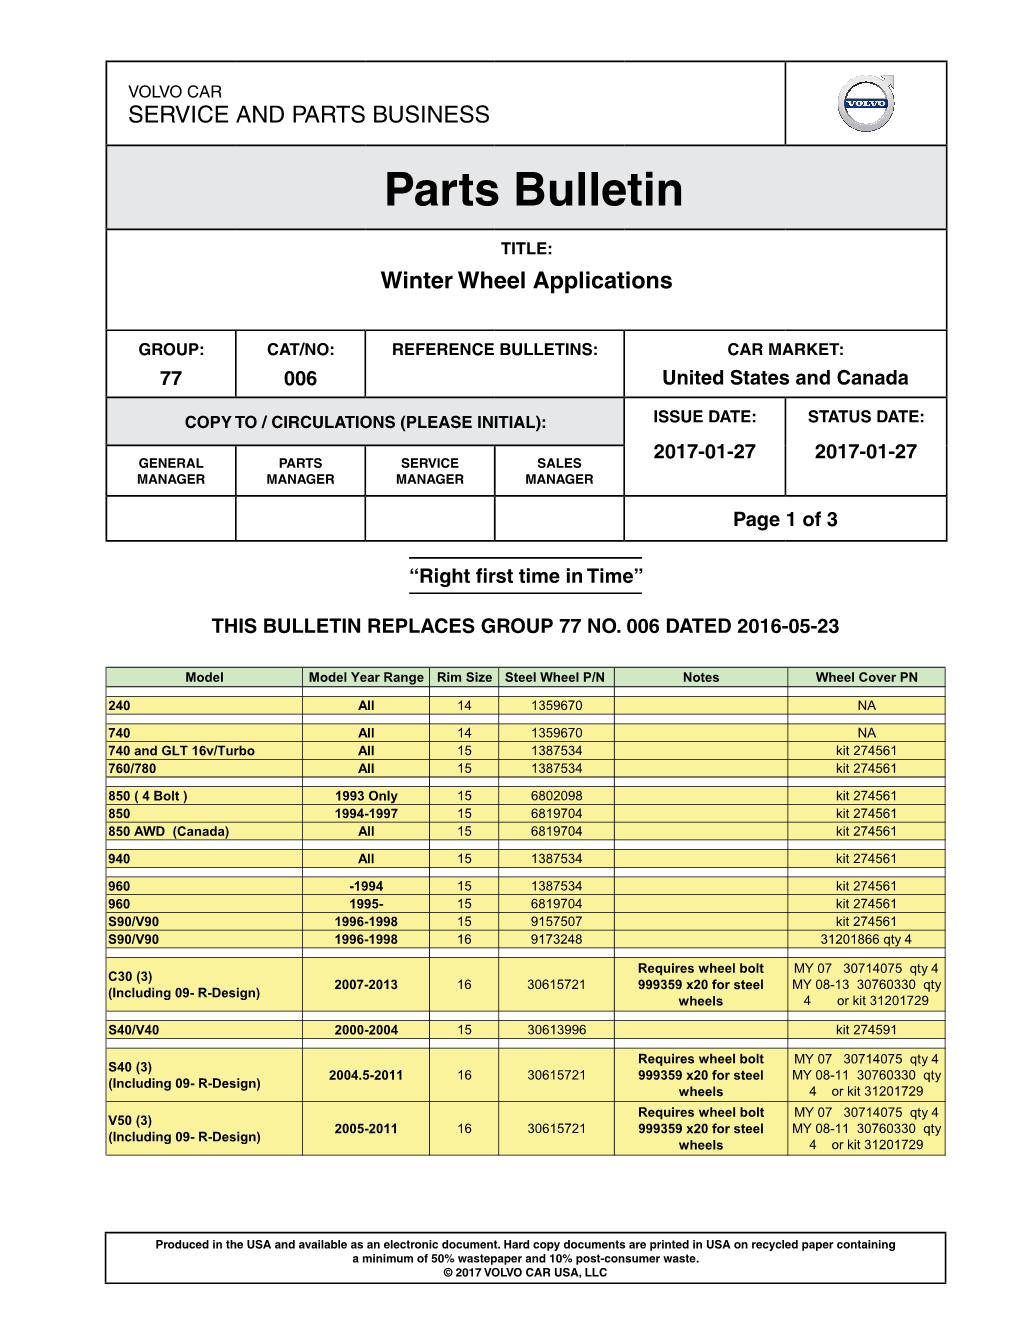 Parts Bulletin